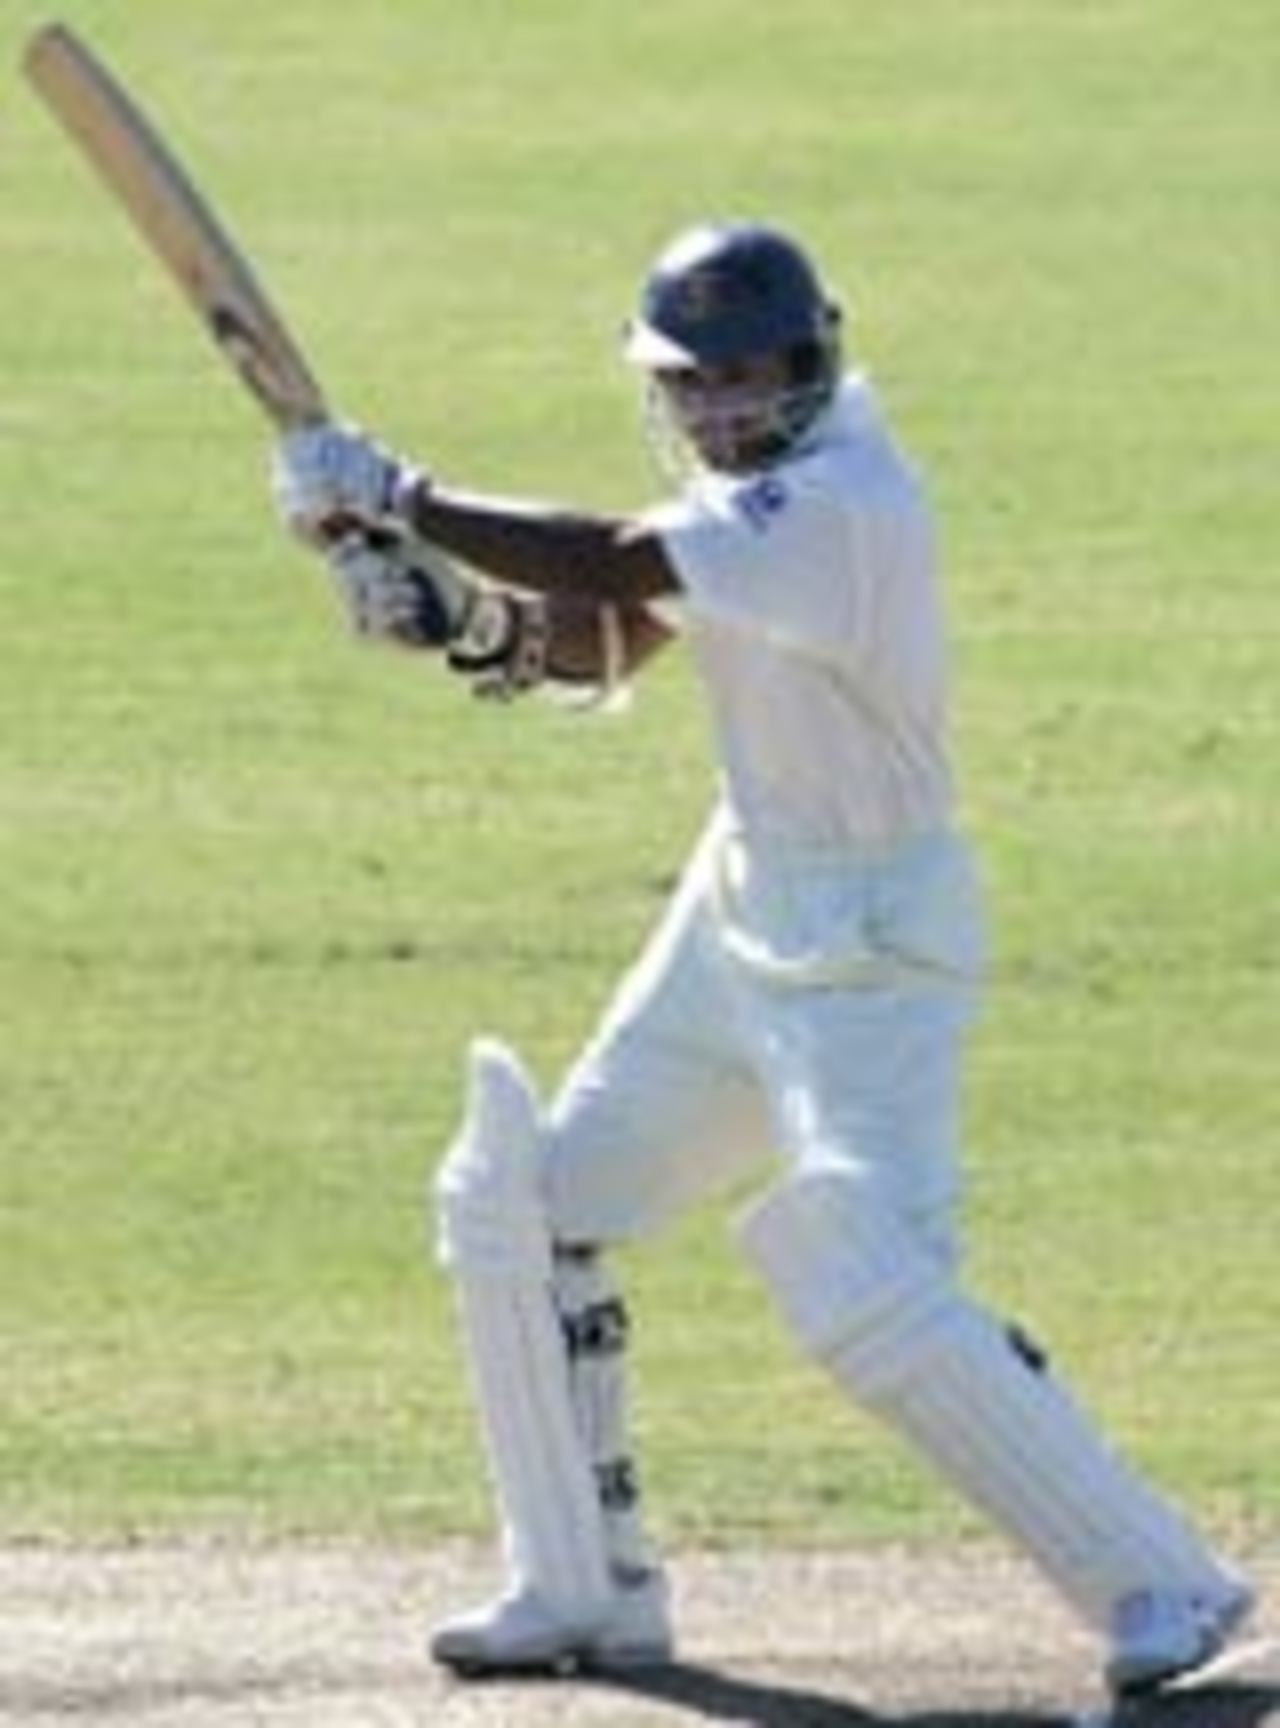 Kumar Sangakkara square drives, NTCM XI v Sri Lankans, Darwin, June 26, 2004